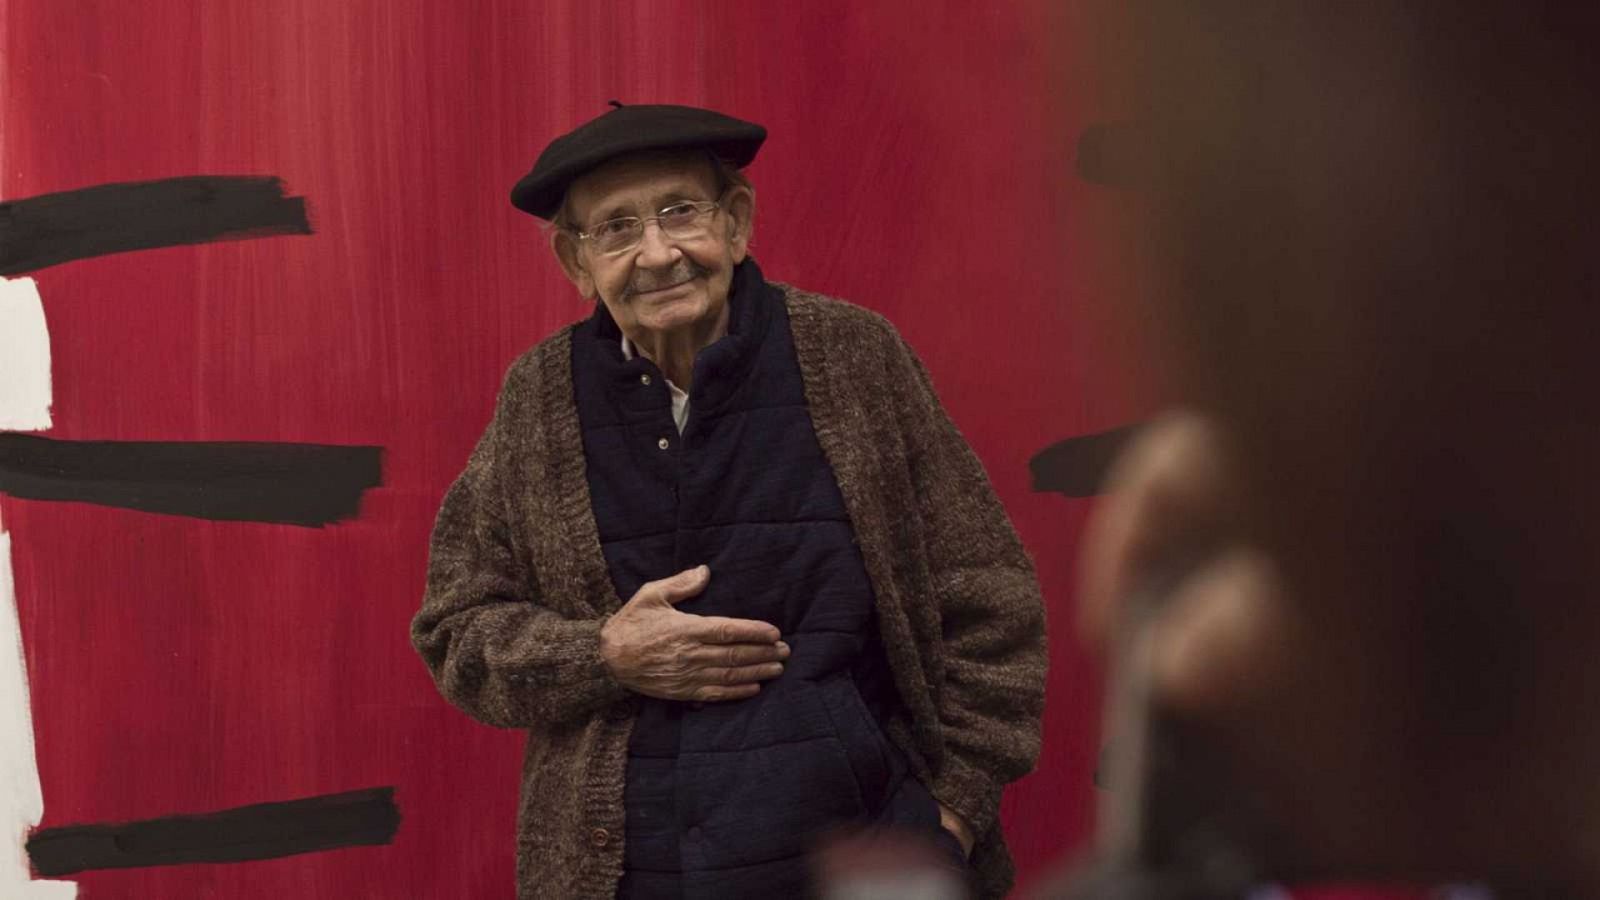 El ojo crítico - Adiós a Agustín Ibarrola, referente del arte vasco - Escuchar ahora